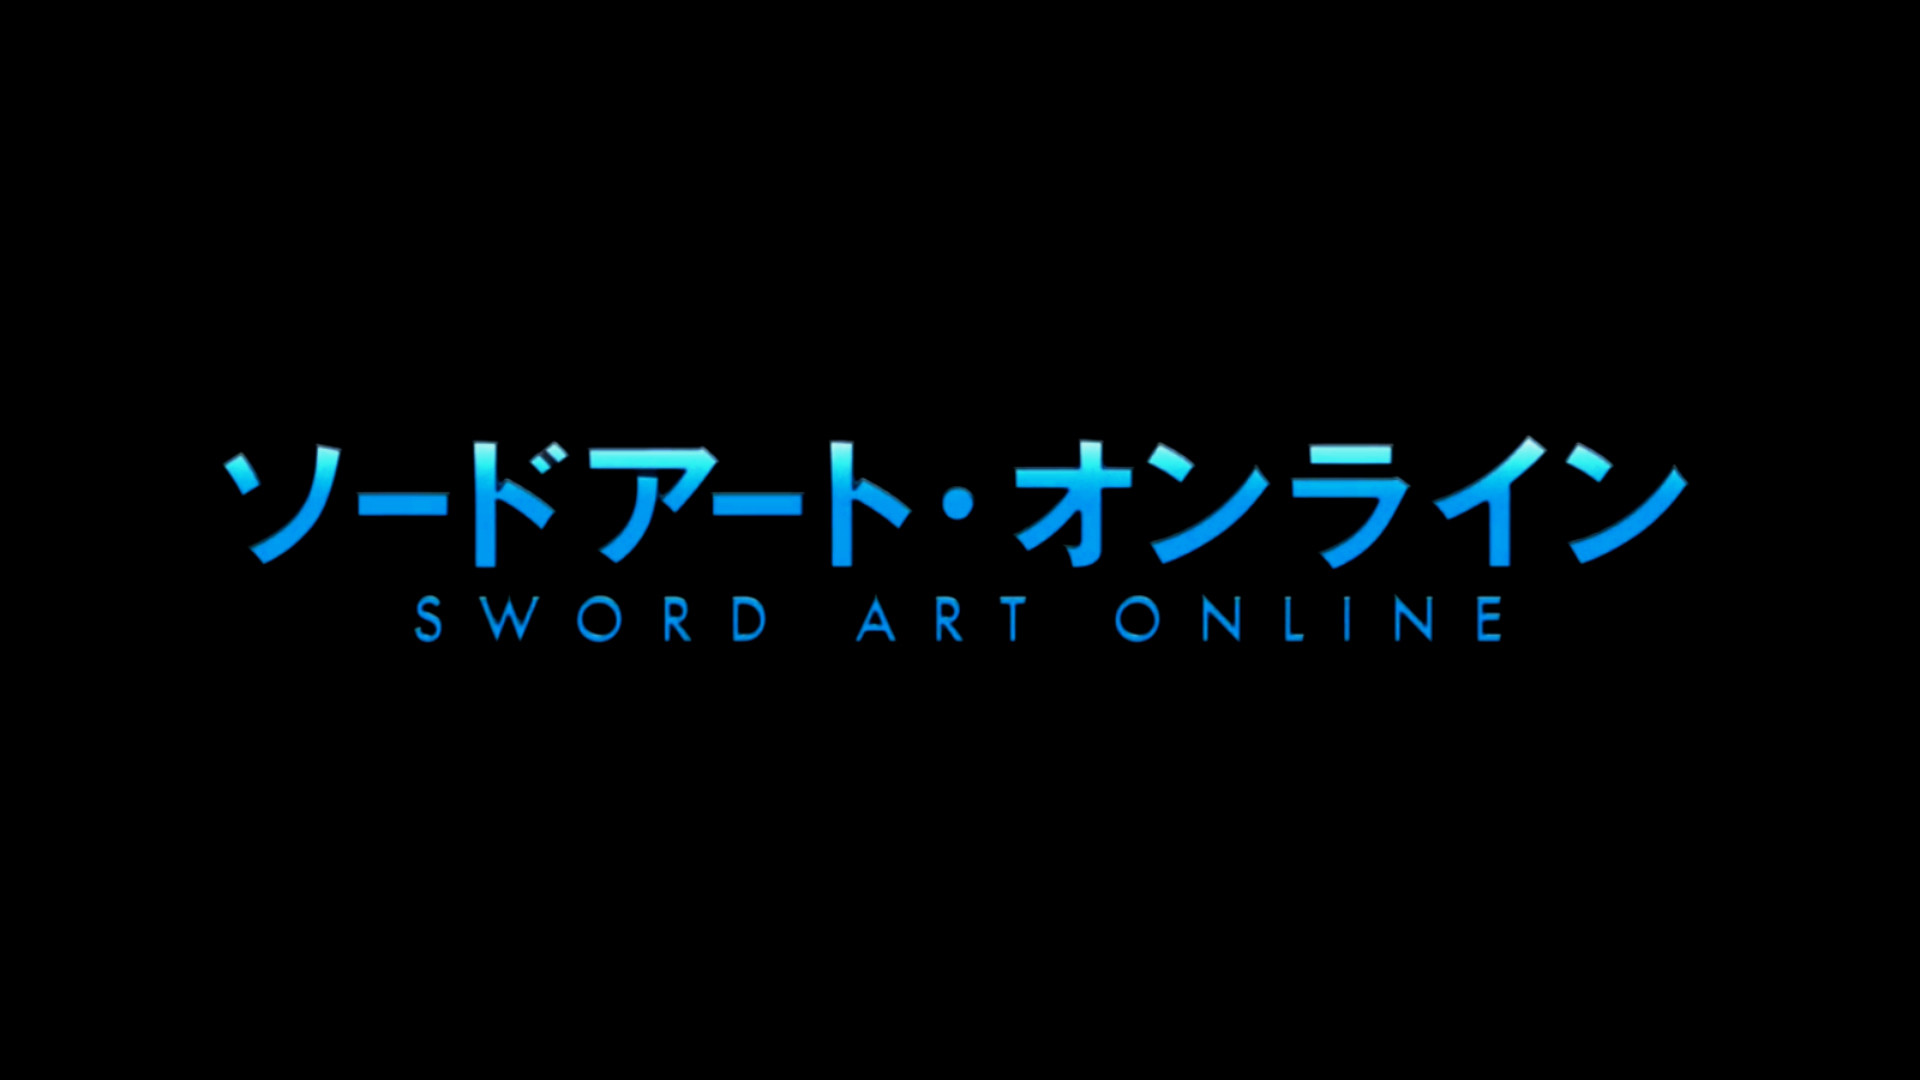 1920x1080 Sword Art Online HD Wallpaper